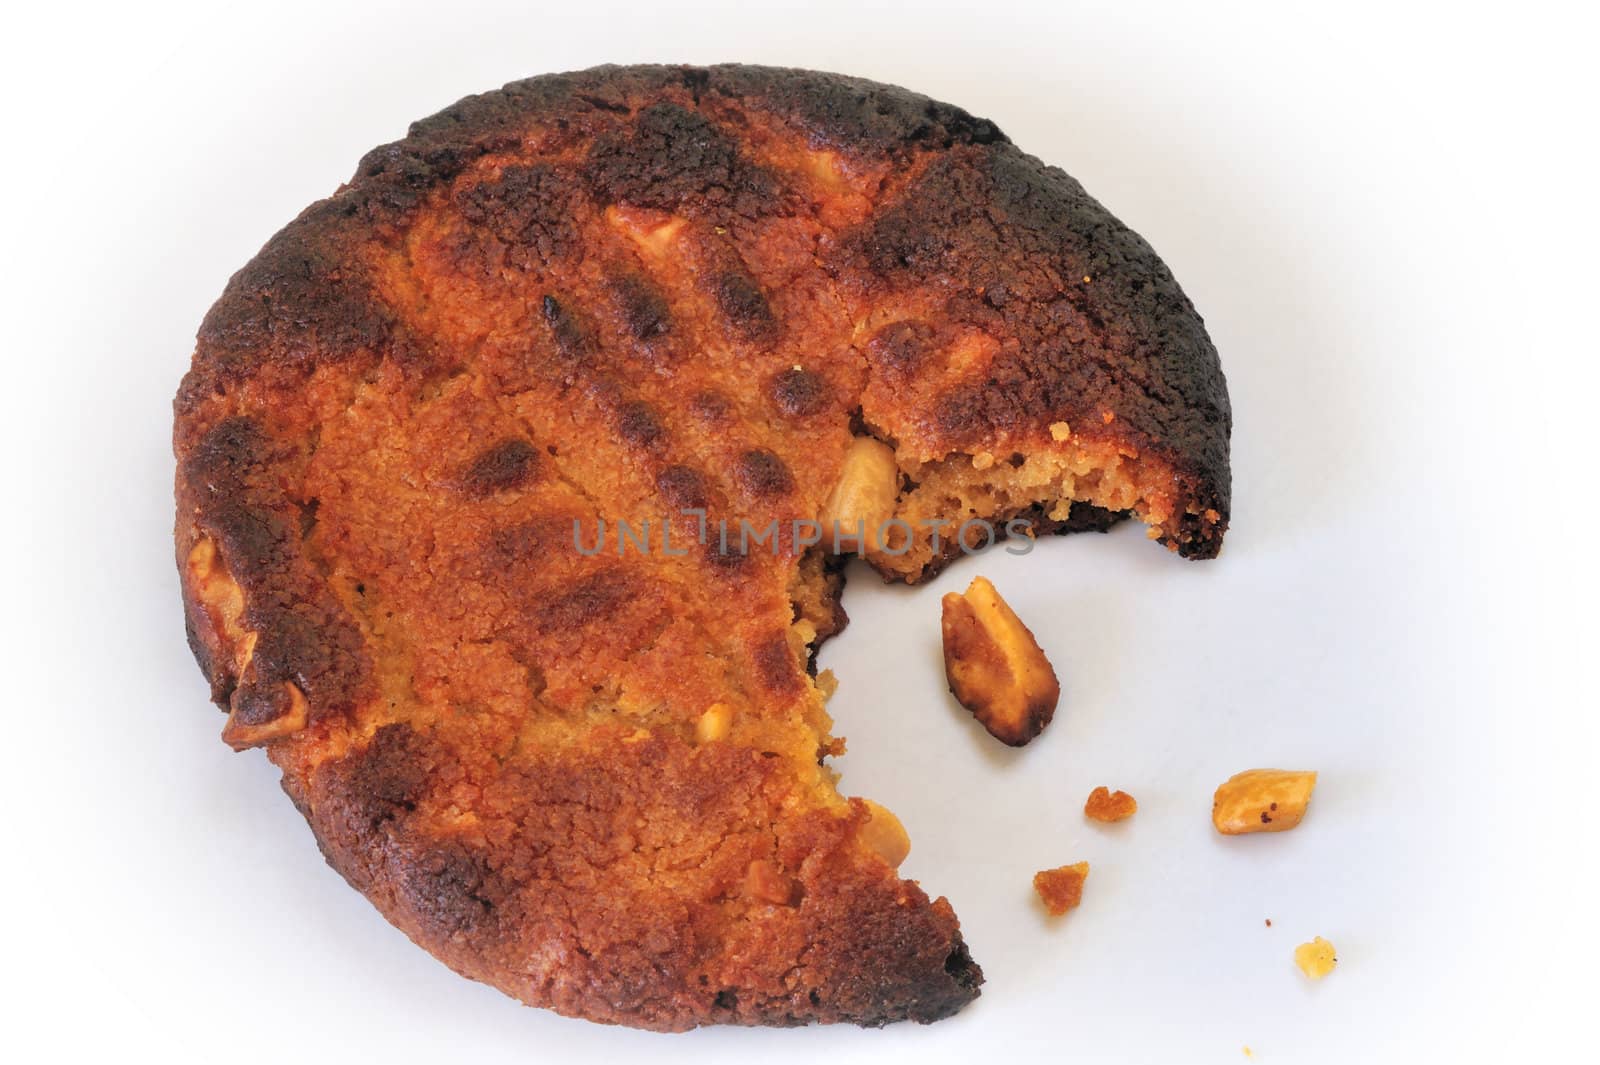 Burned biscuit by Bateleur